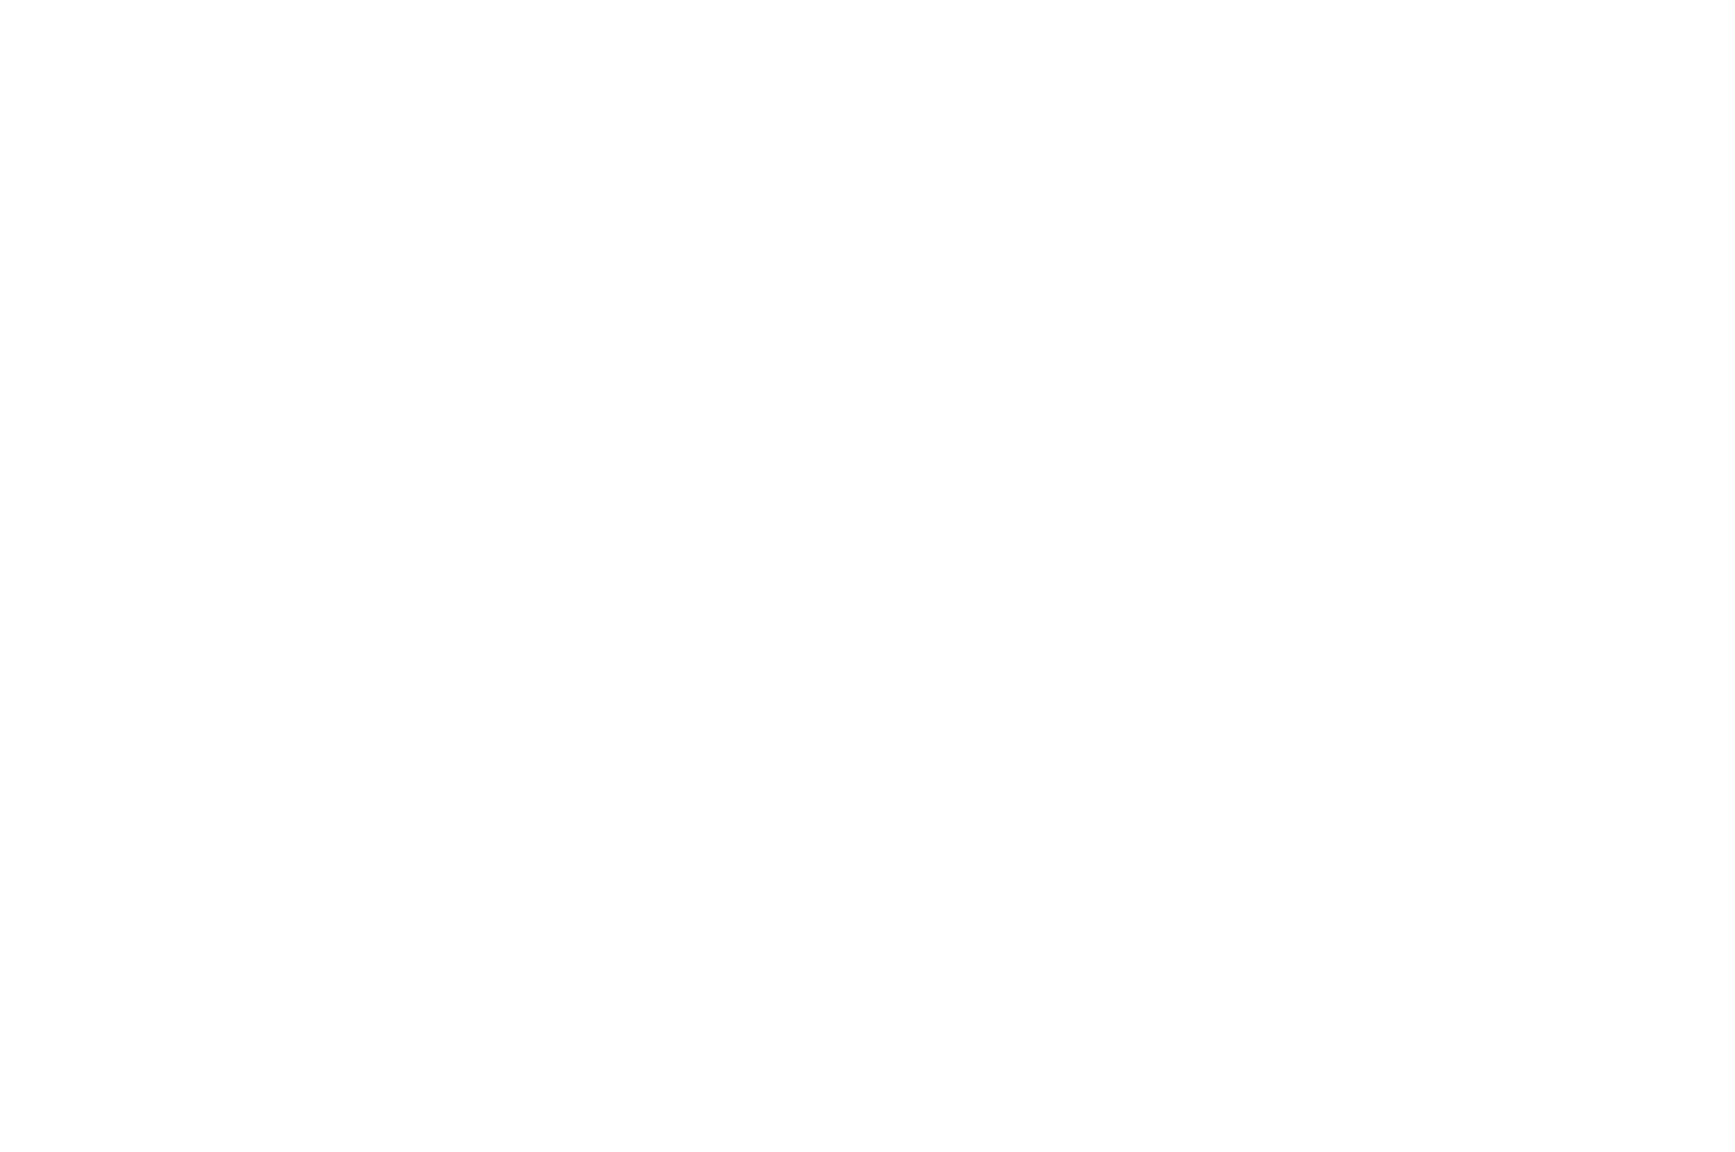 OFFICIAL SELECTION - Glendale International Film Festival - 2017